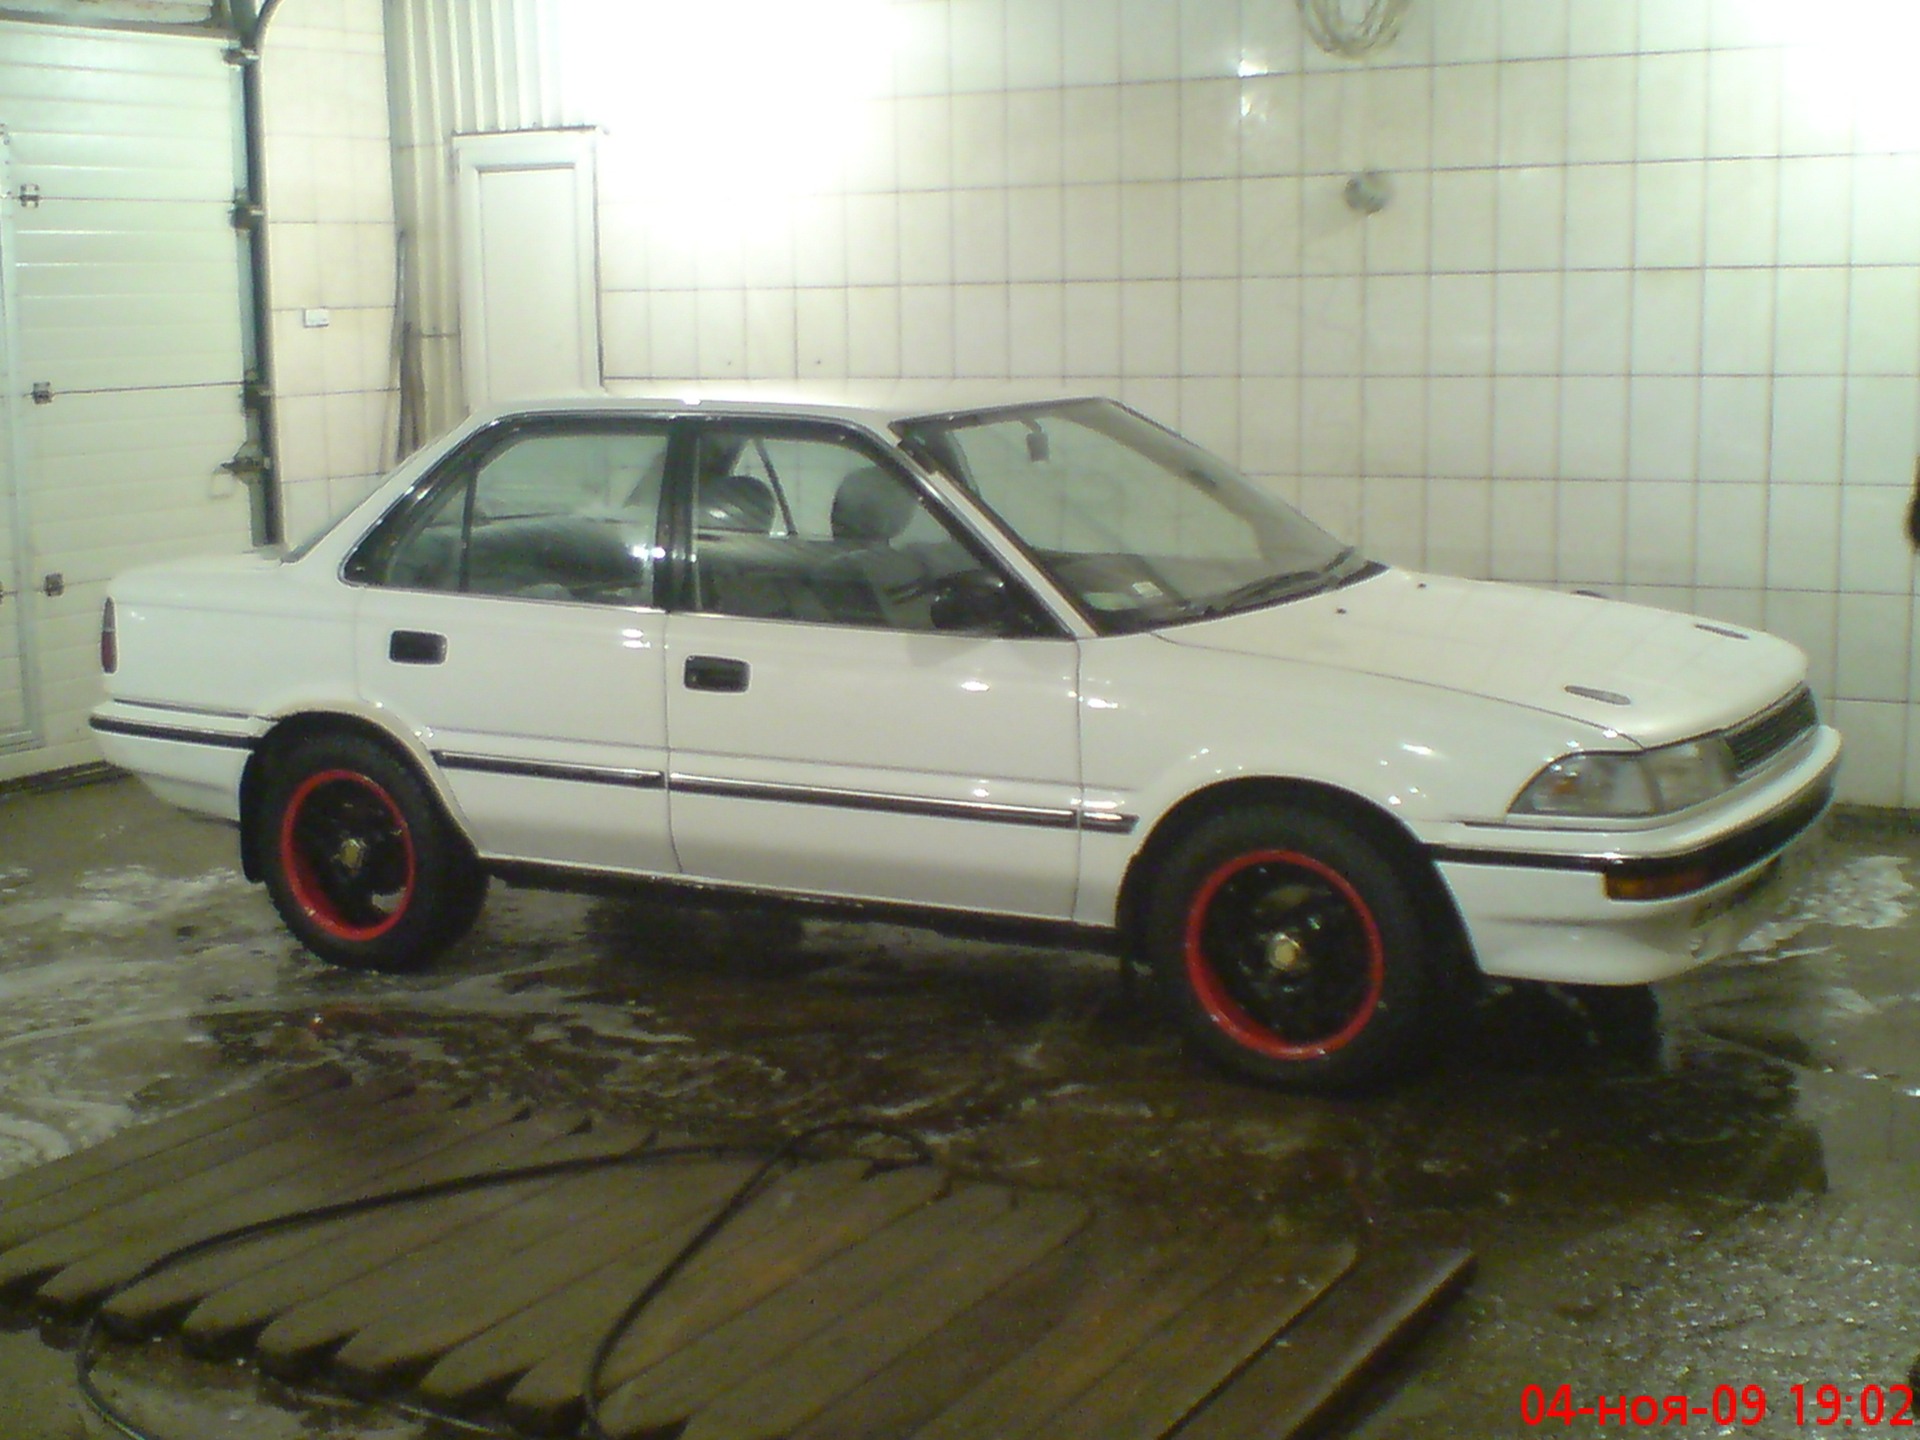 6 2010 Toyota Corolla 20 1987